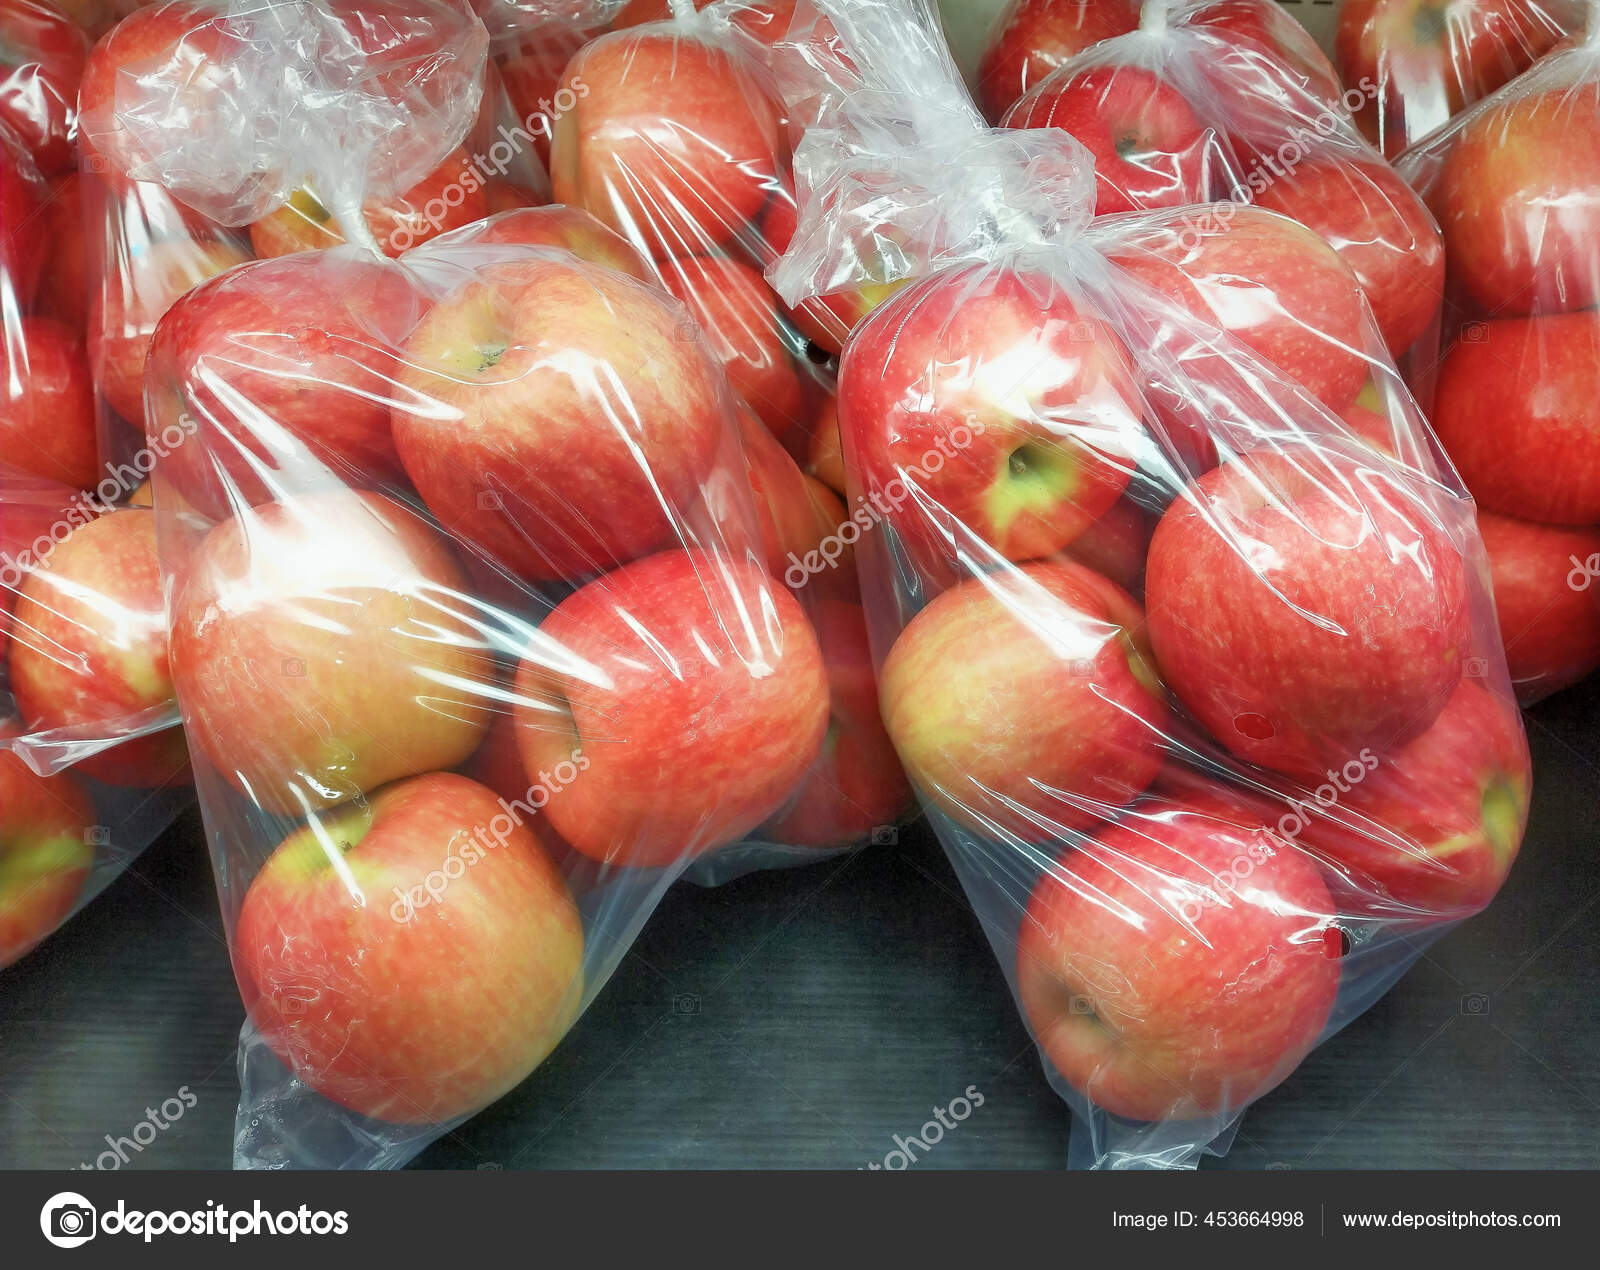 https://st2.depositphotos.com/3938905/45366/i/1600/depositphotos_453664998-stock-photo-fresh-organic-apples-packed-plastic.jpg